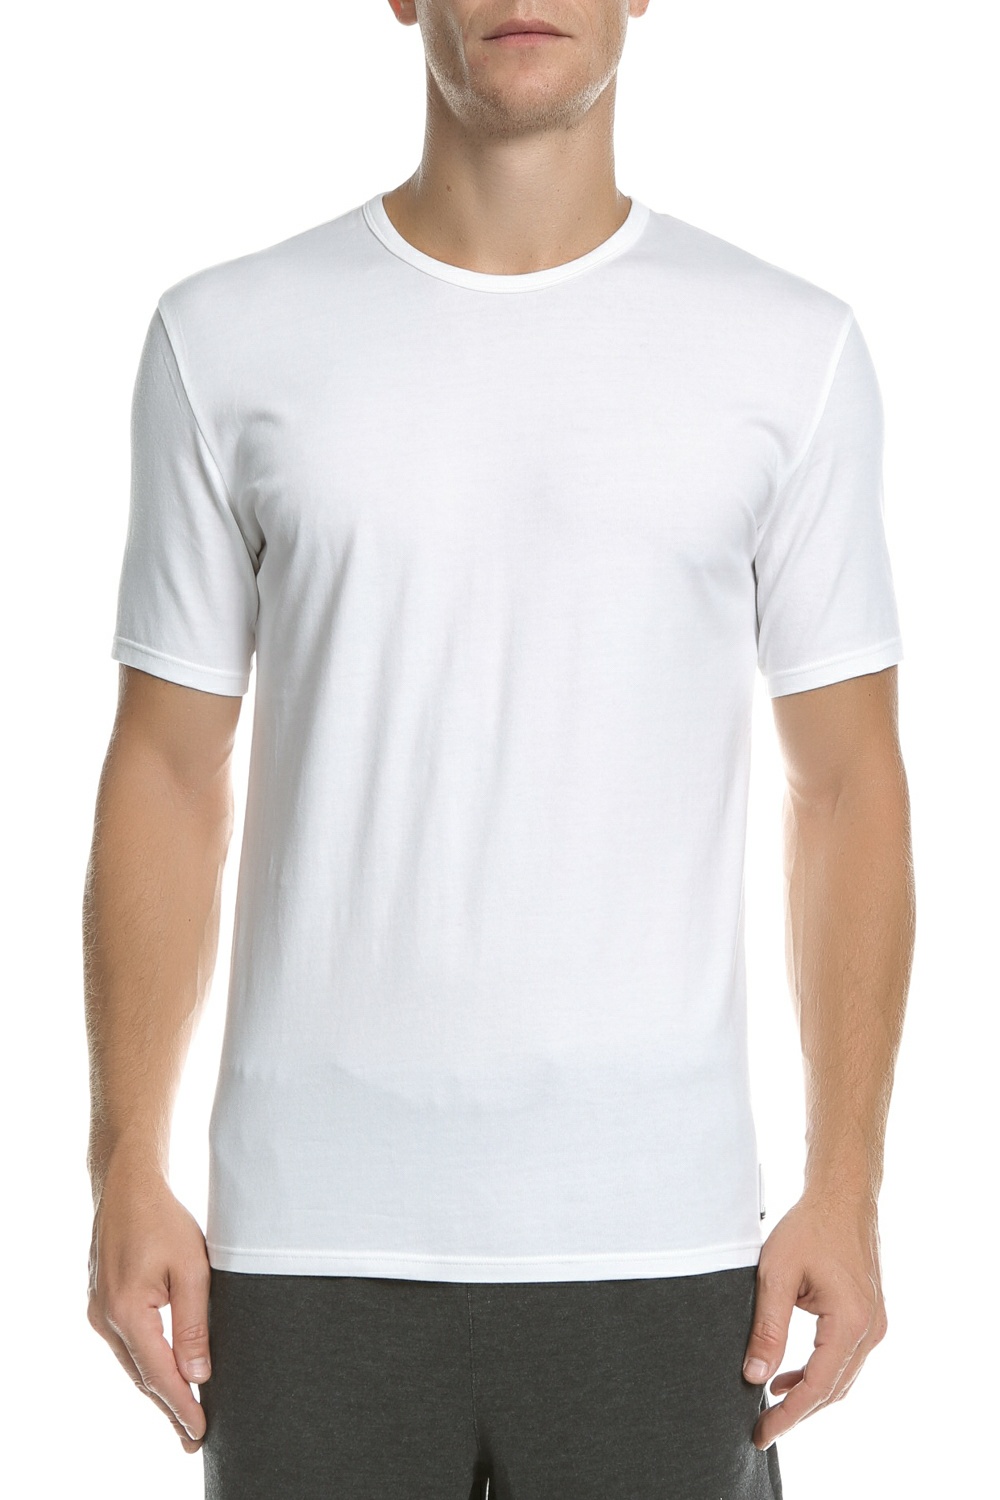 CK UNDERWEAR - Ανδρικό T-shirt CK UNDERWEAR λευκό Ανδρικά/Ρούχα/Μπλούζες/Κοντομάνικες